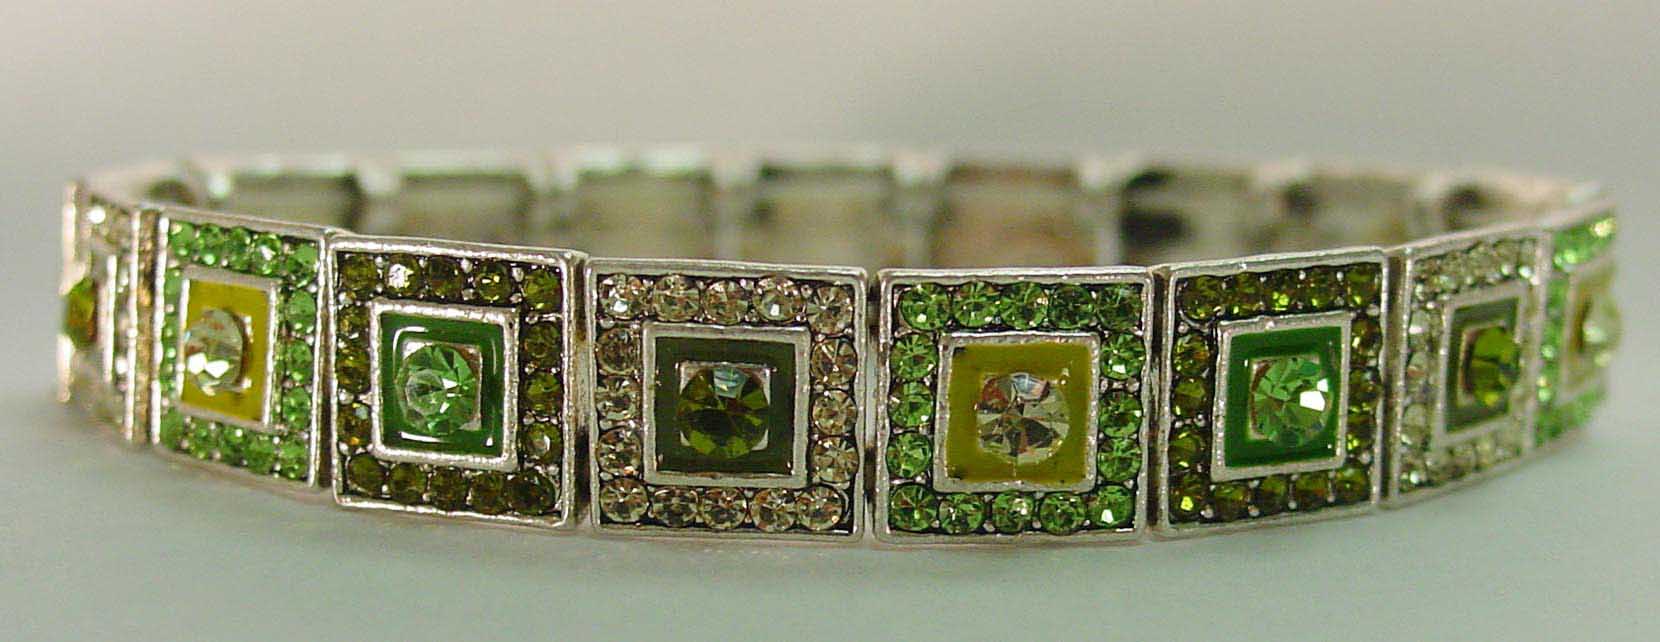 Green crystal rhodium plated bracelet